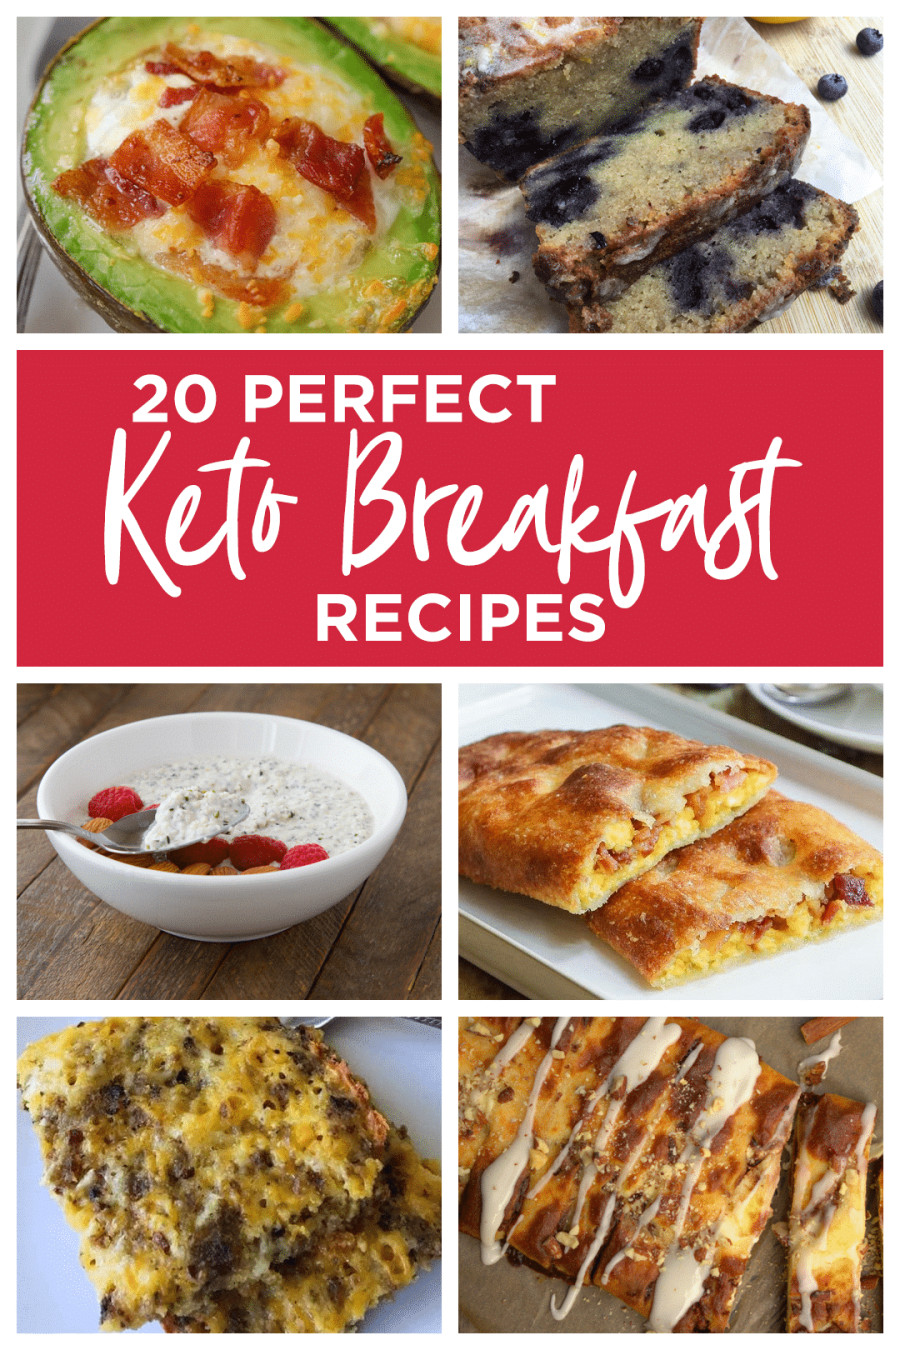 Low Carb Keto Recipes Breakfast
 Keto Breakfast Recipes 20 Perfect Keto & Low Carb